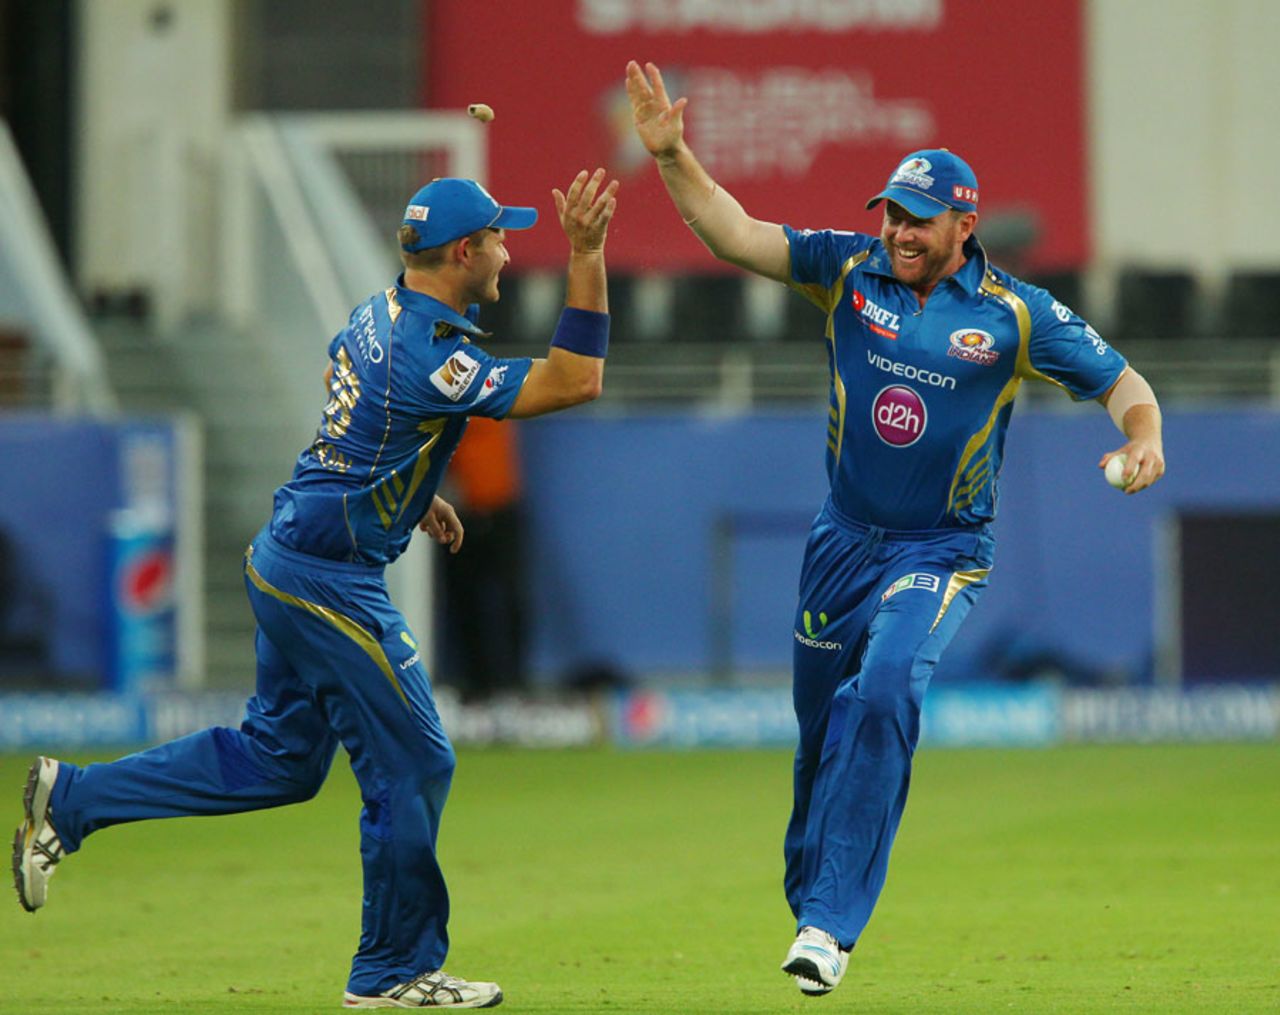 Ben Dunk celebrates after taking a catch to dismiss Aaron Finch, Mumbai Indians v Sunrisers Hyderabad, IPL 2014, Dubai, April 30, 2014